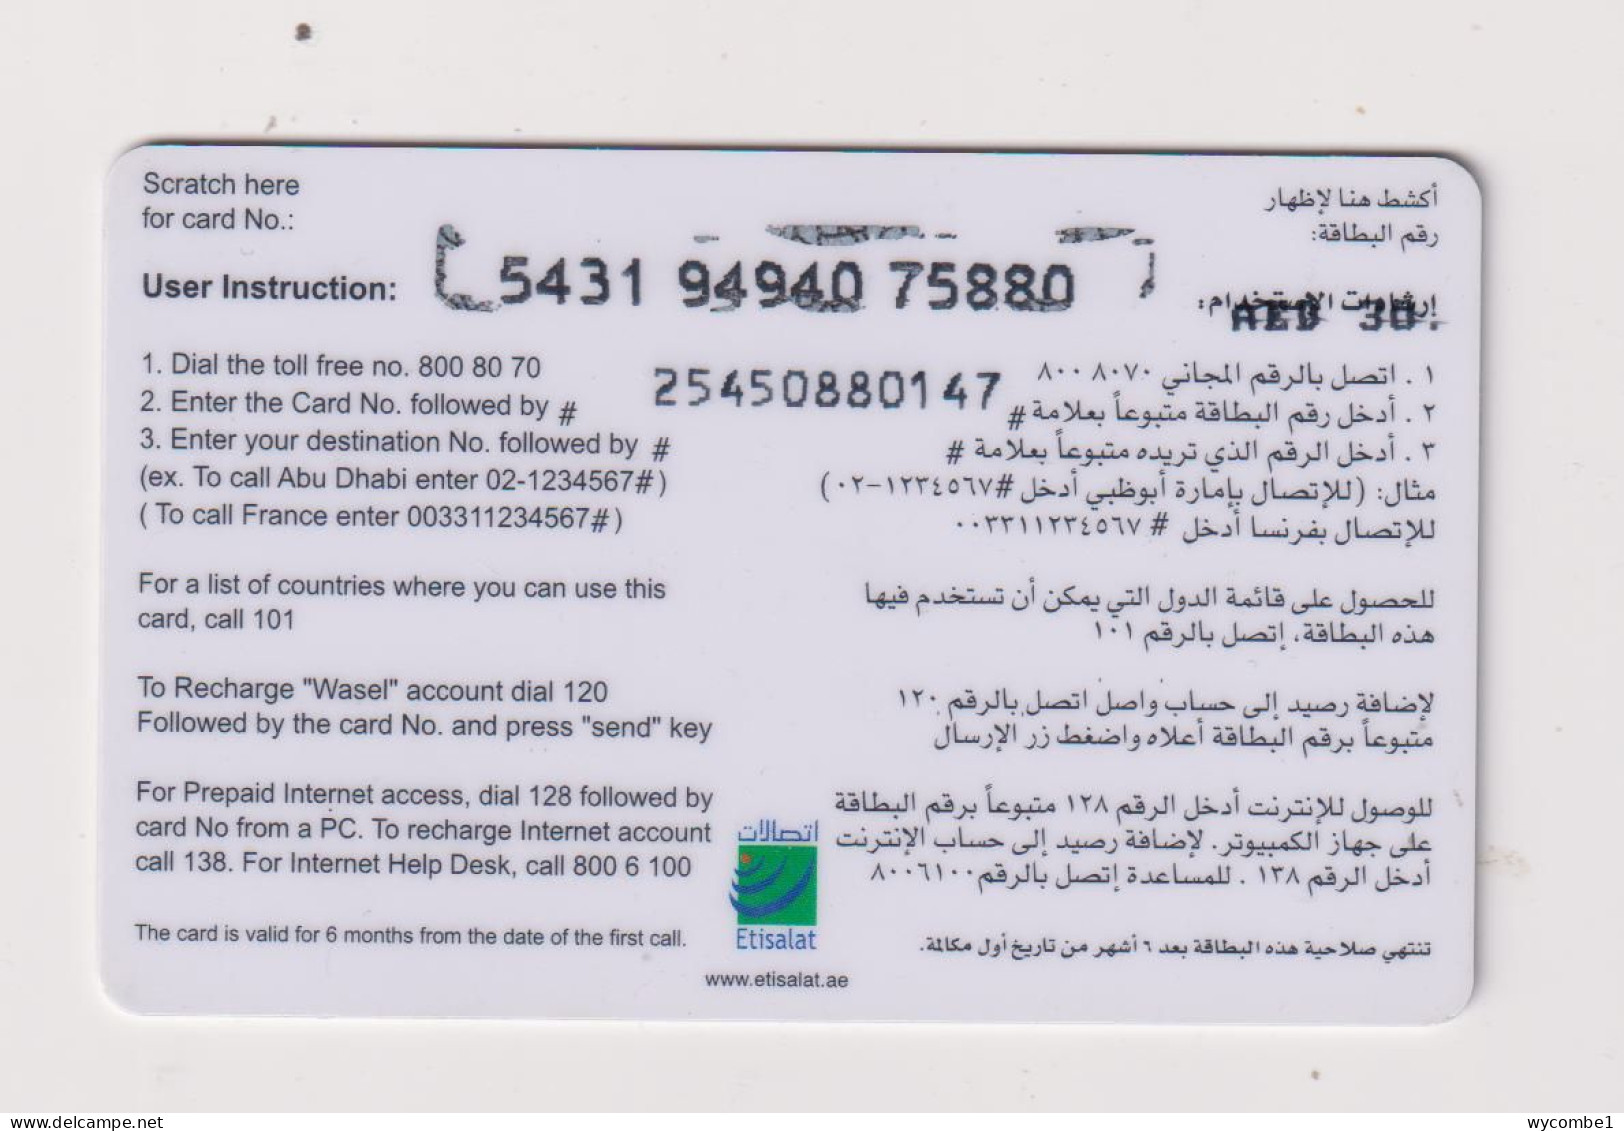 UNITED ARAB EMIRATES - Smiley Face Remote Phonecard - United Arab Emirates